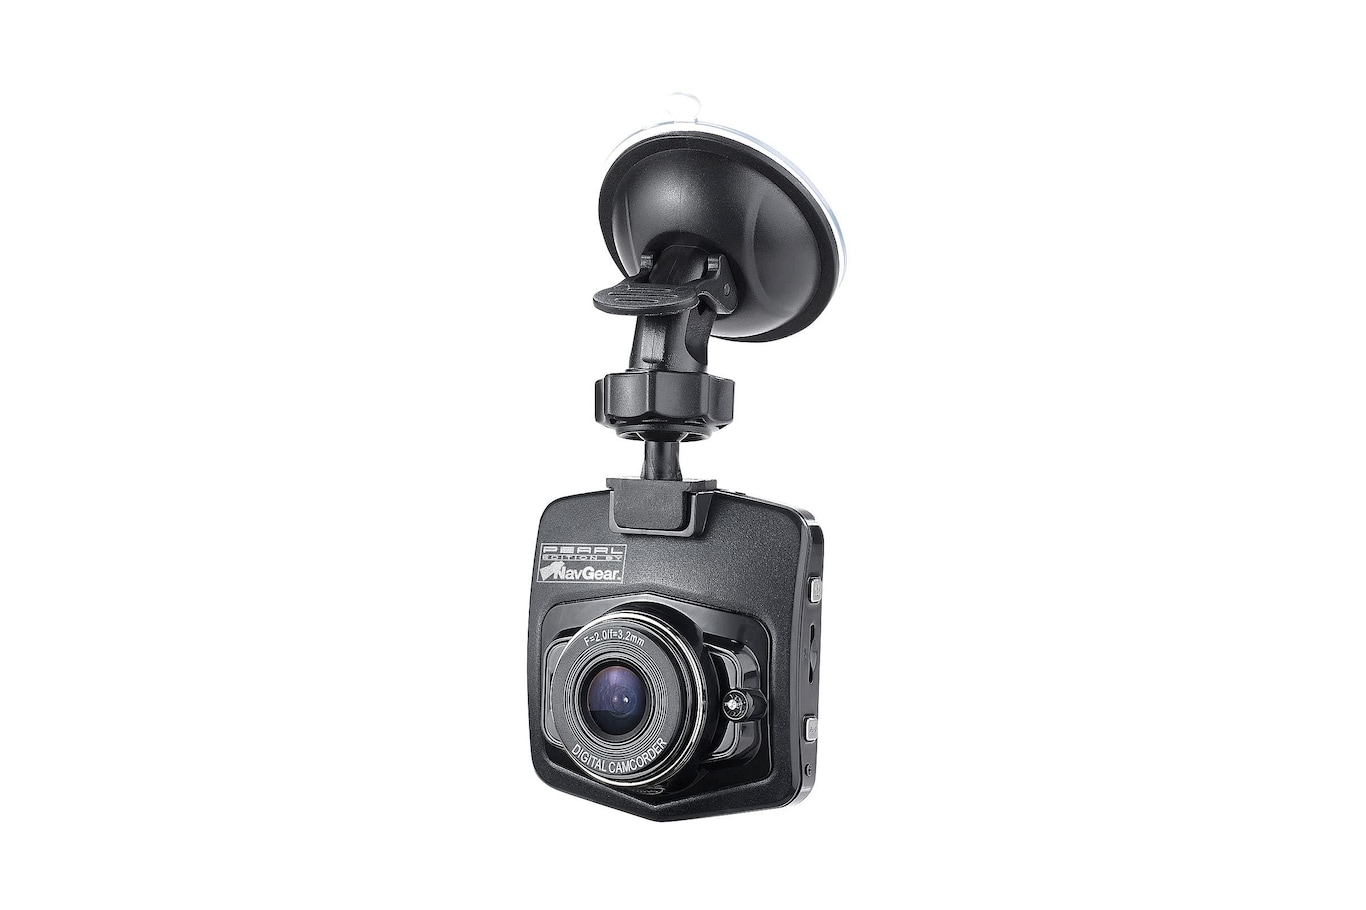 HD Dual Objektiv Dash Kamera dashcam Auto kabellos Dash cam, 1,5